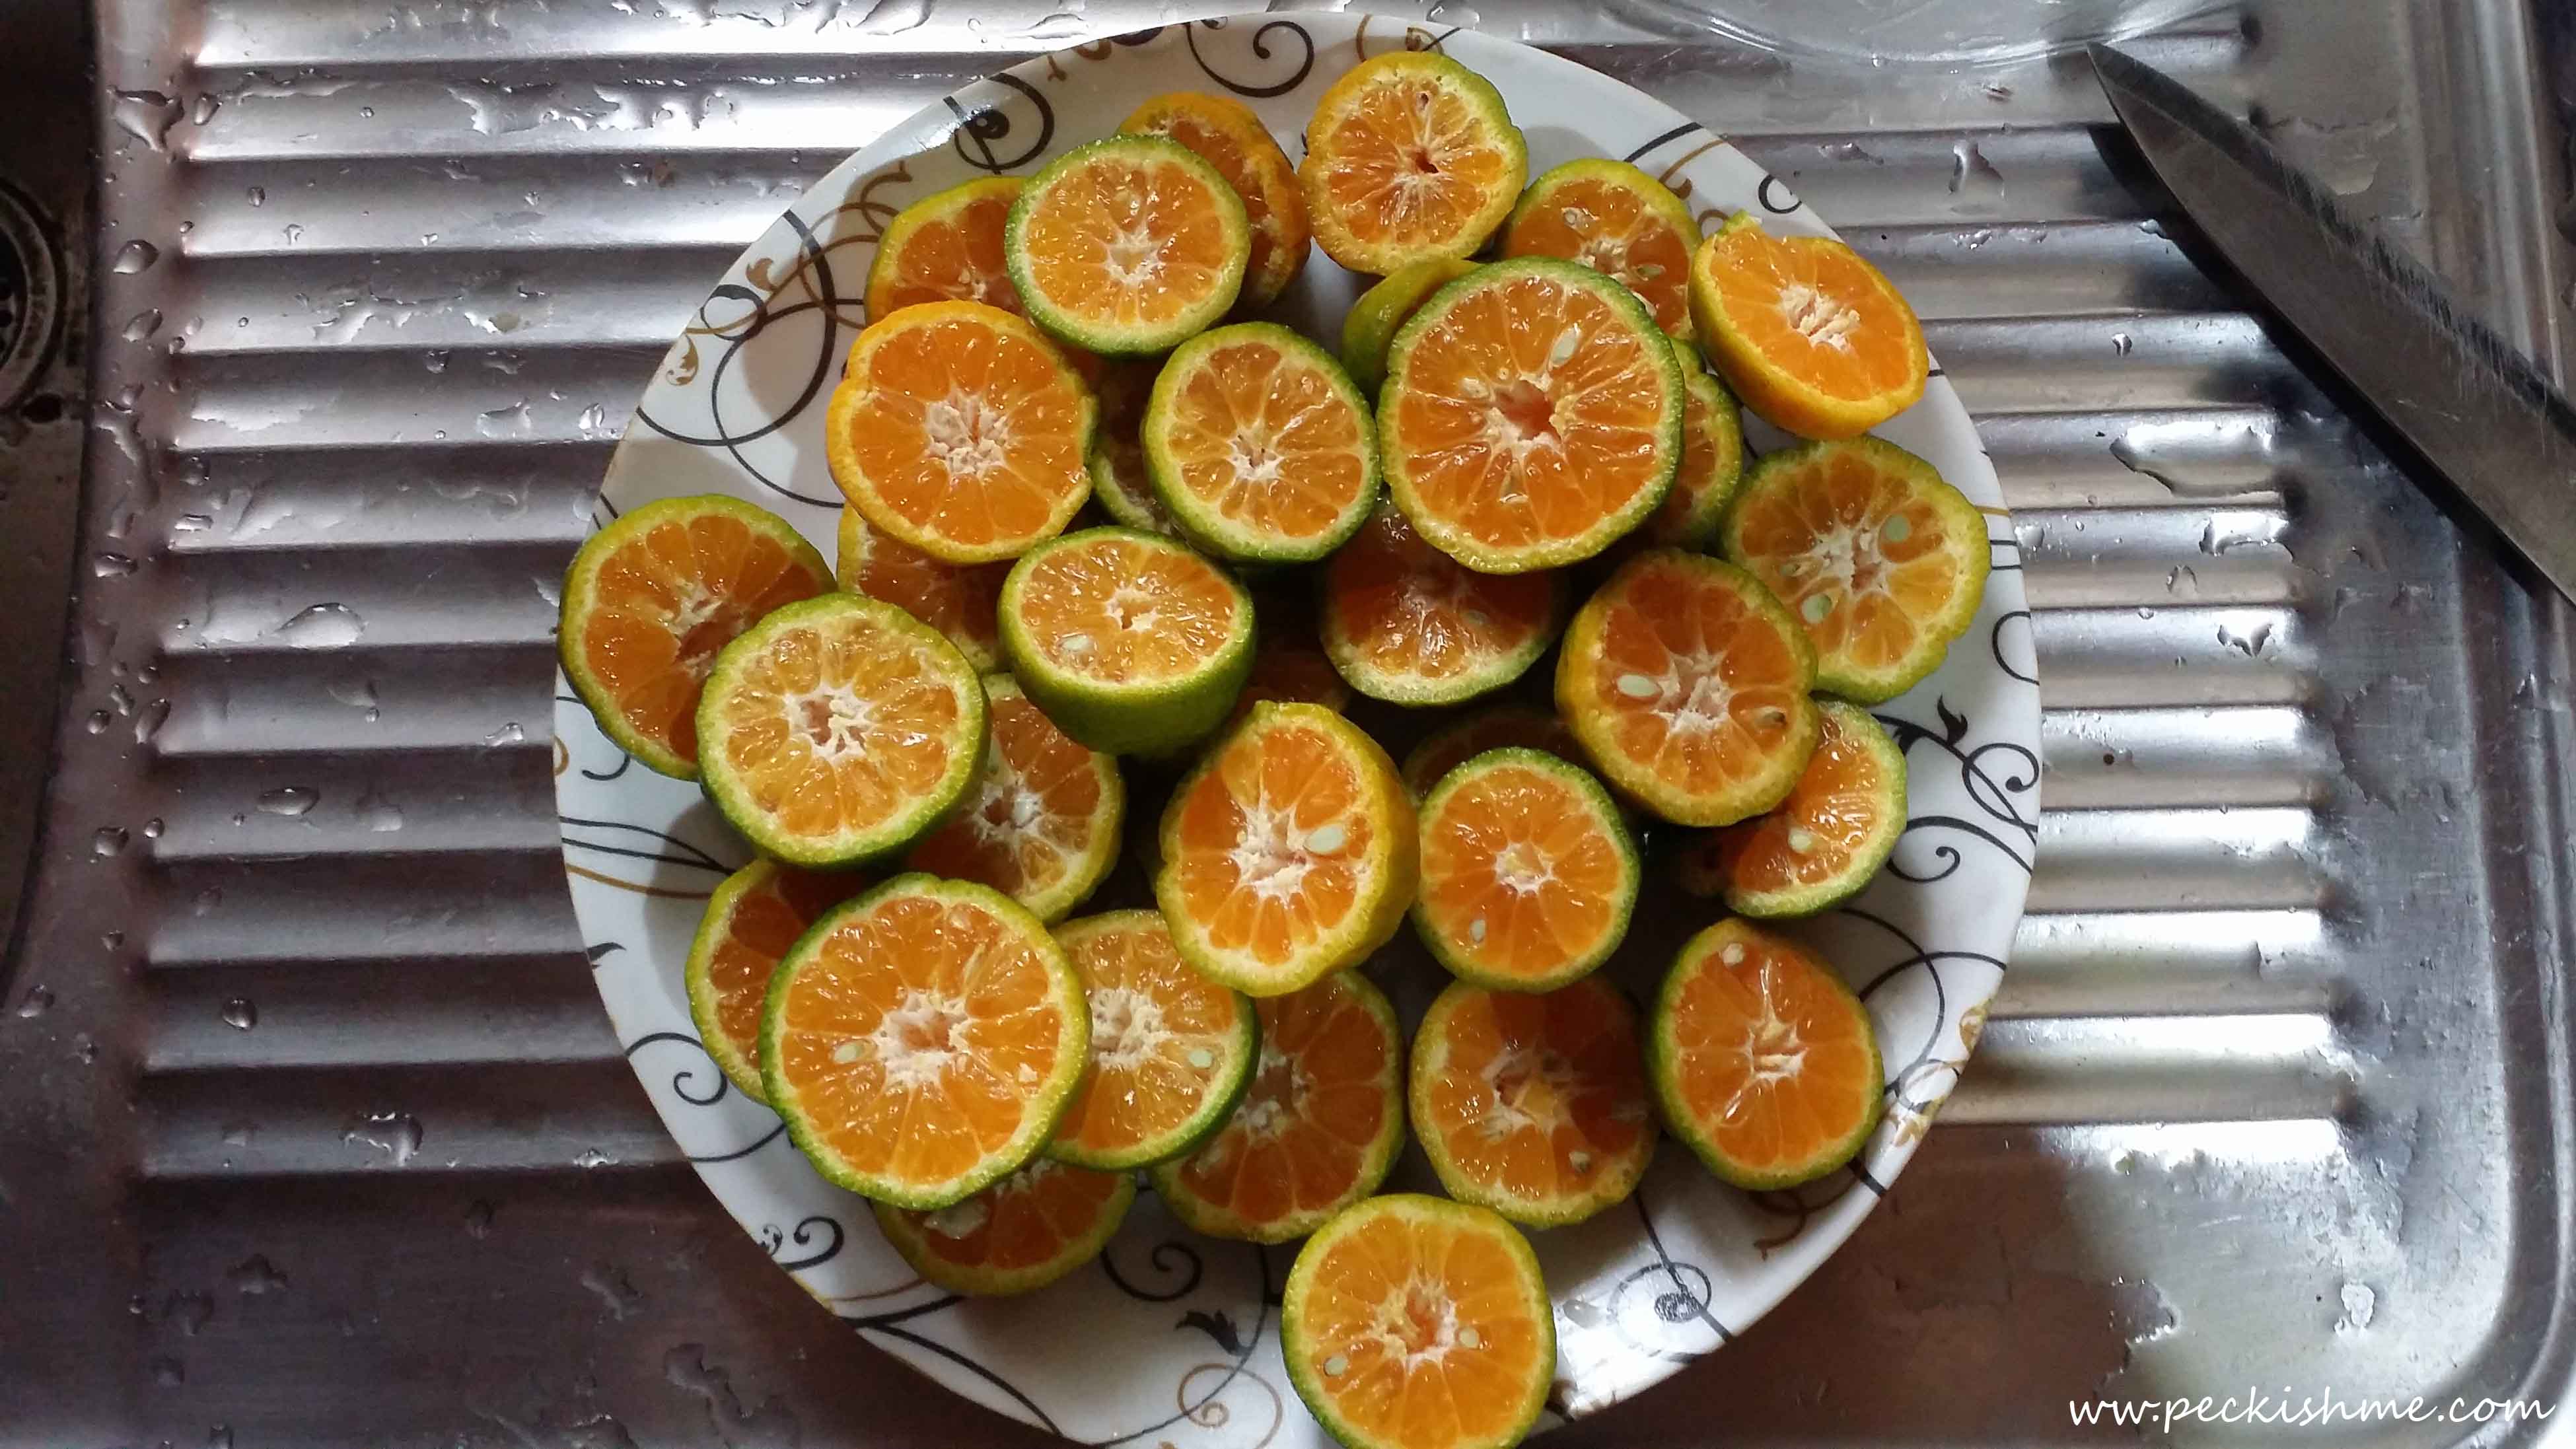 Sri Lankan citrus fruit